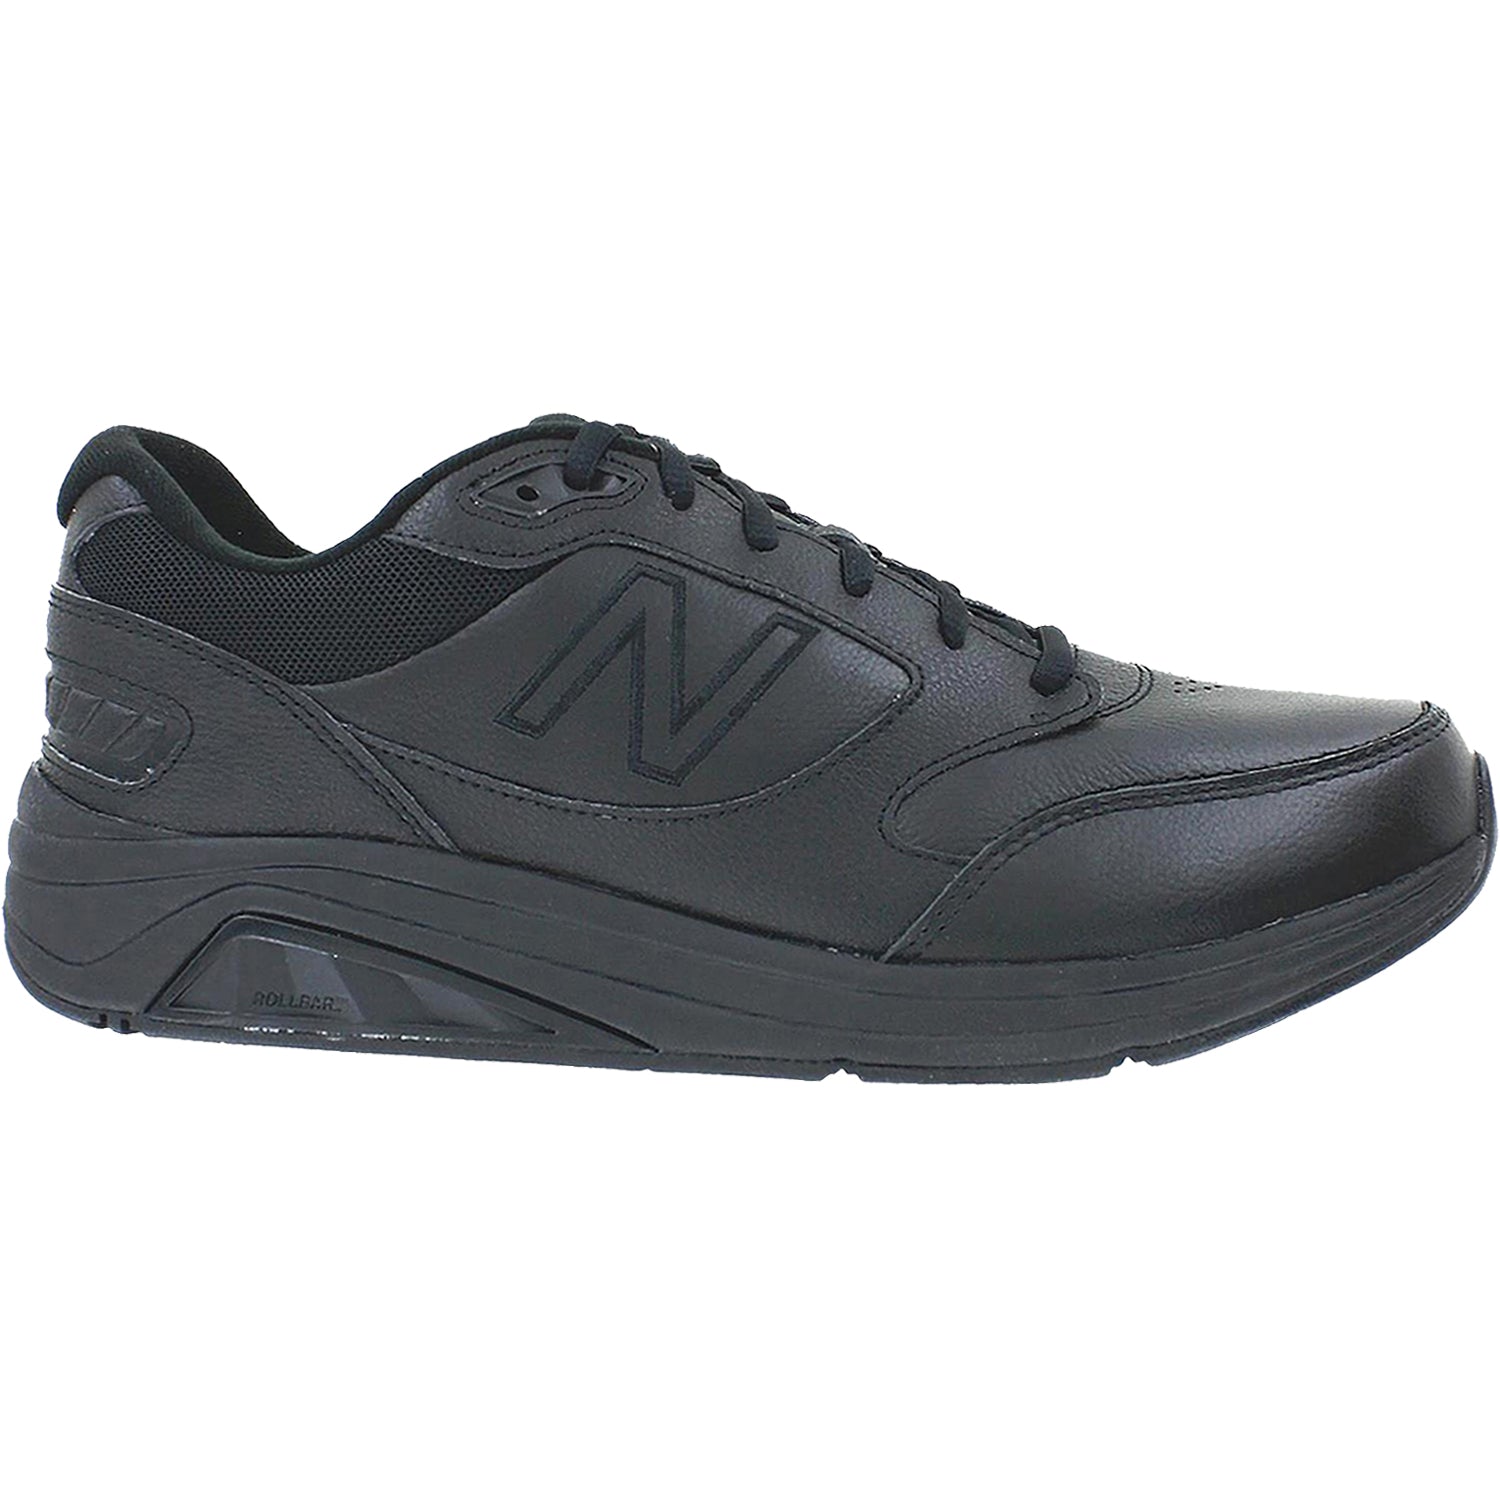 New Balance MW928v3 Black Leather Walking Shoes for Men – Footwear etc.